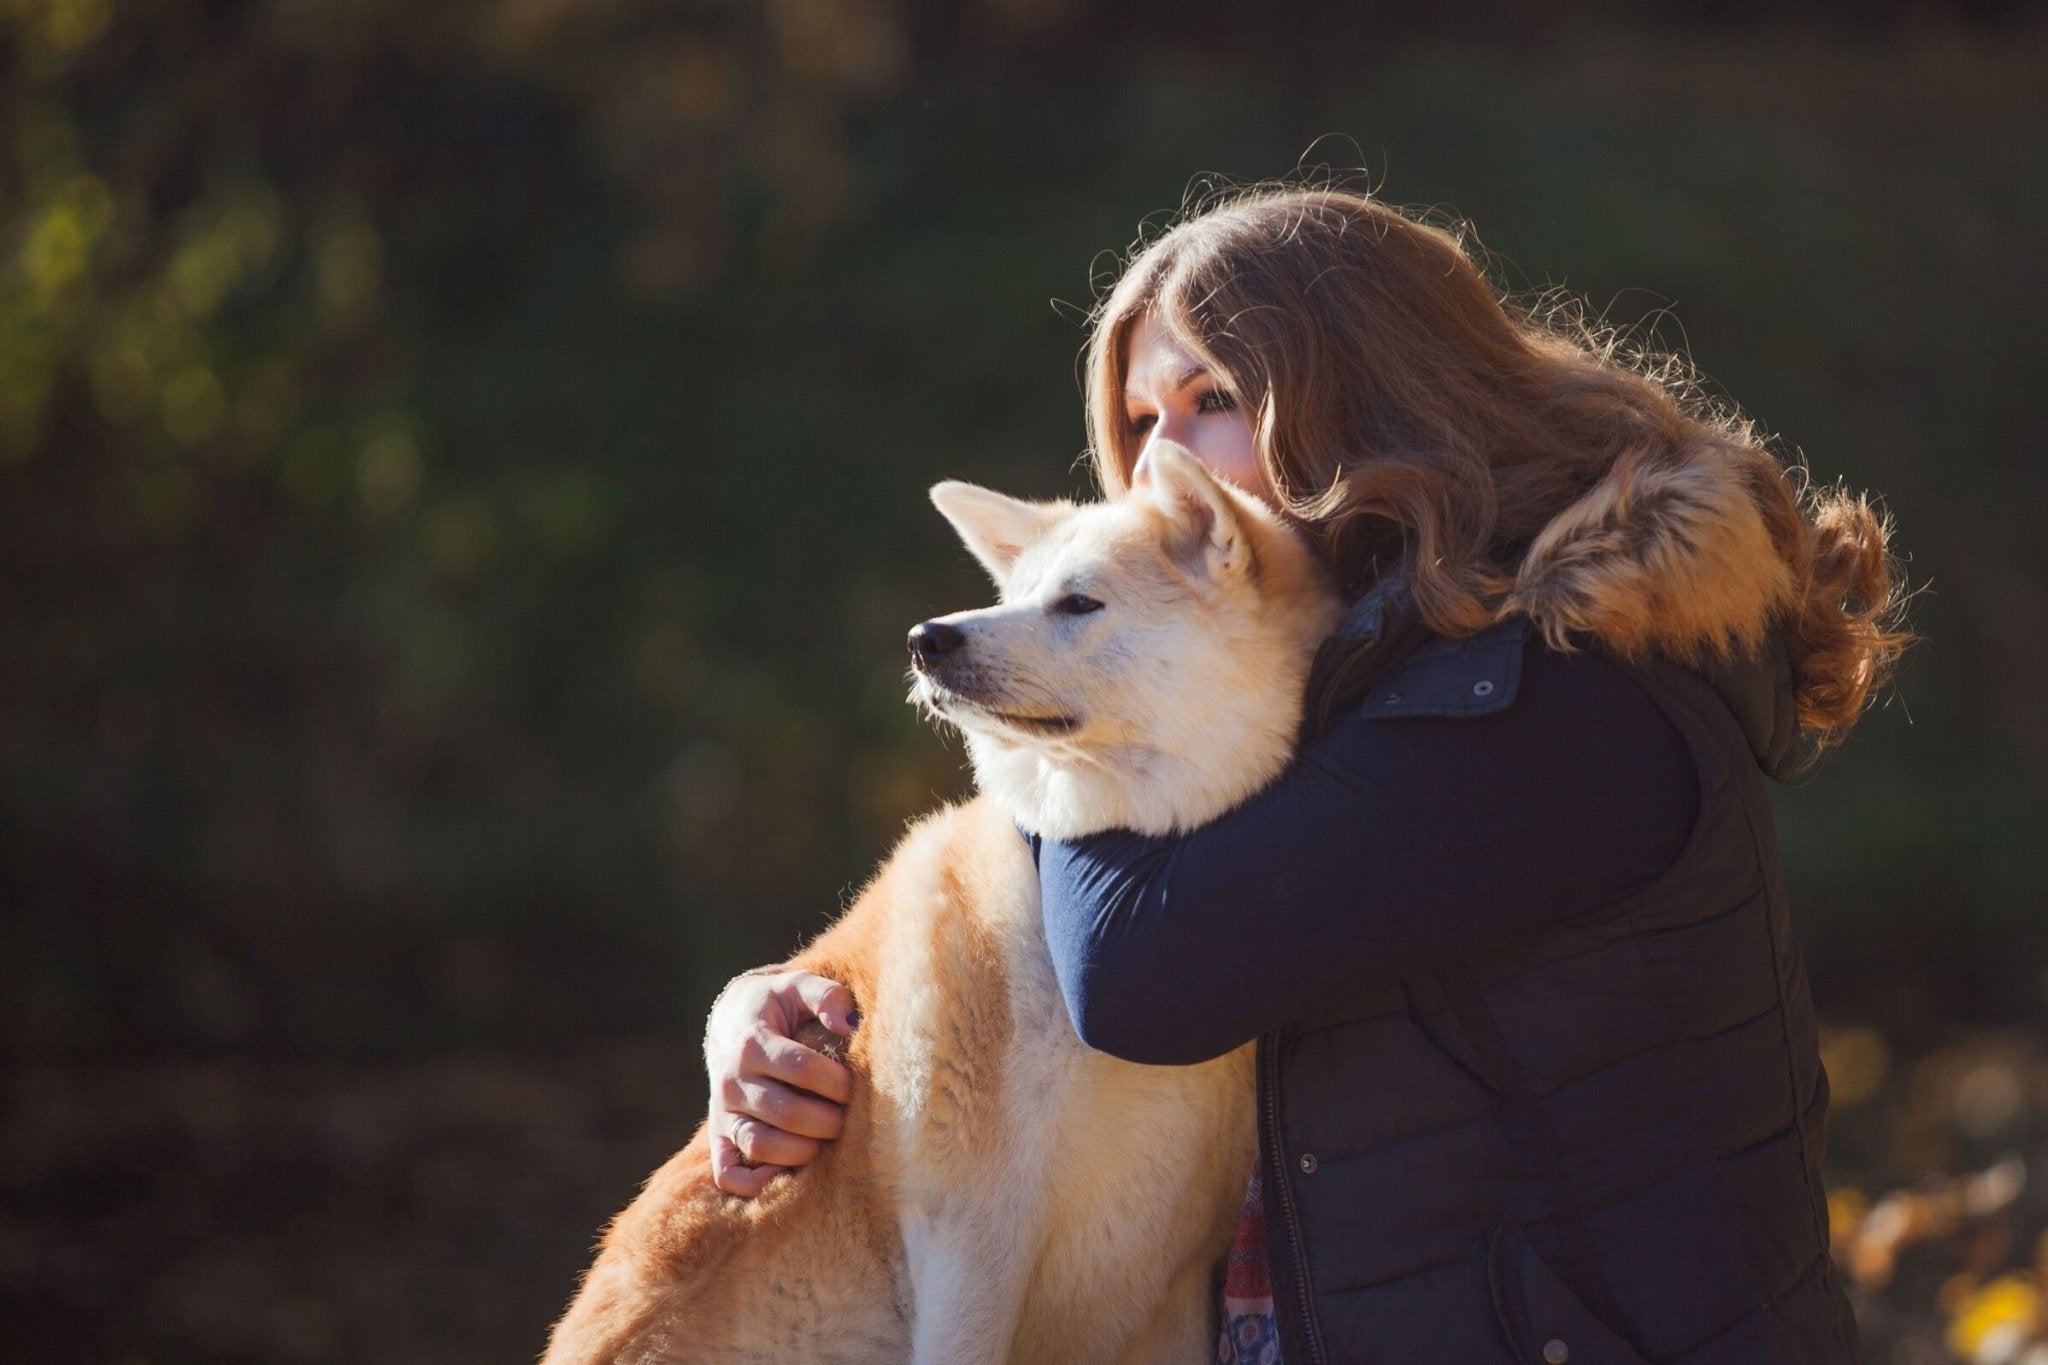 Sweetie tips for walking & grooming your dog in winter - Sweetie